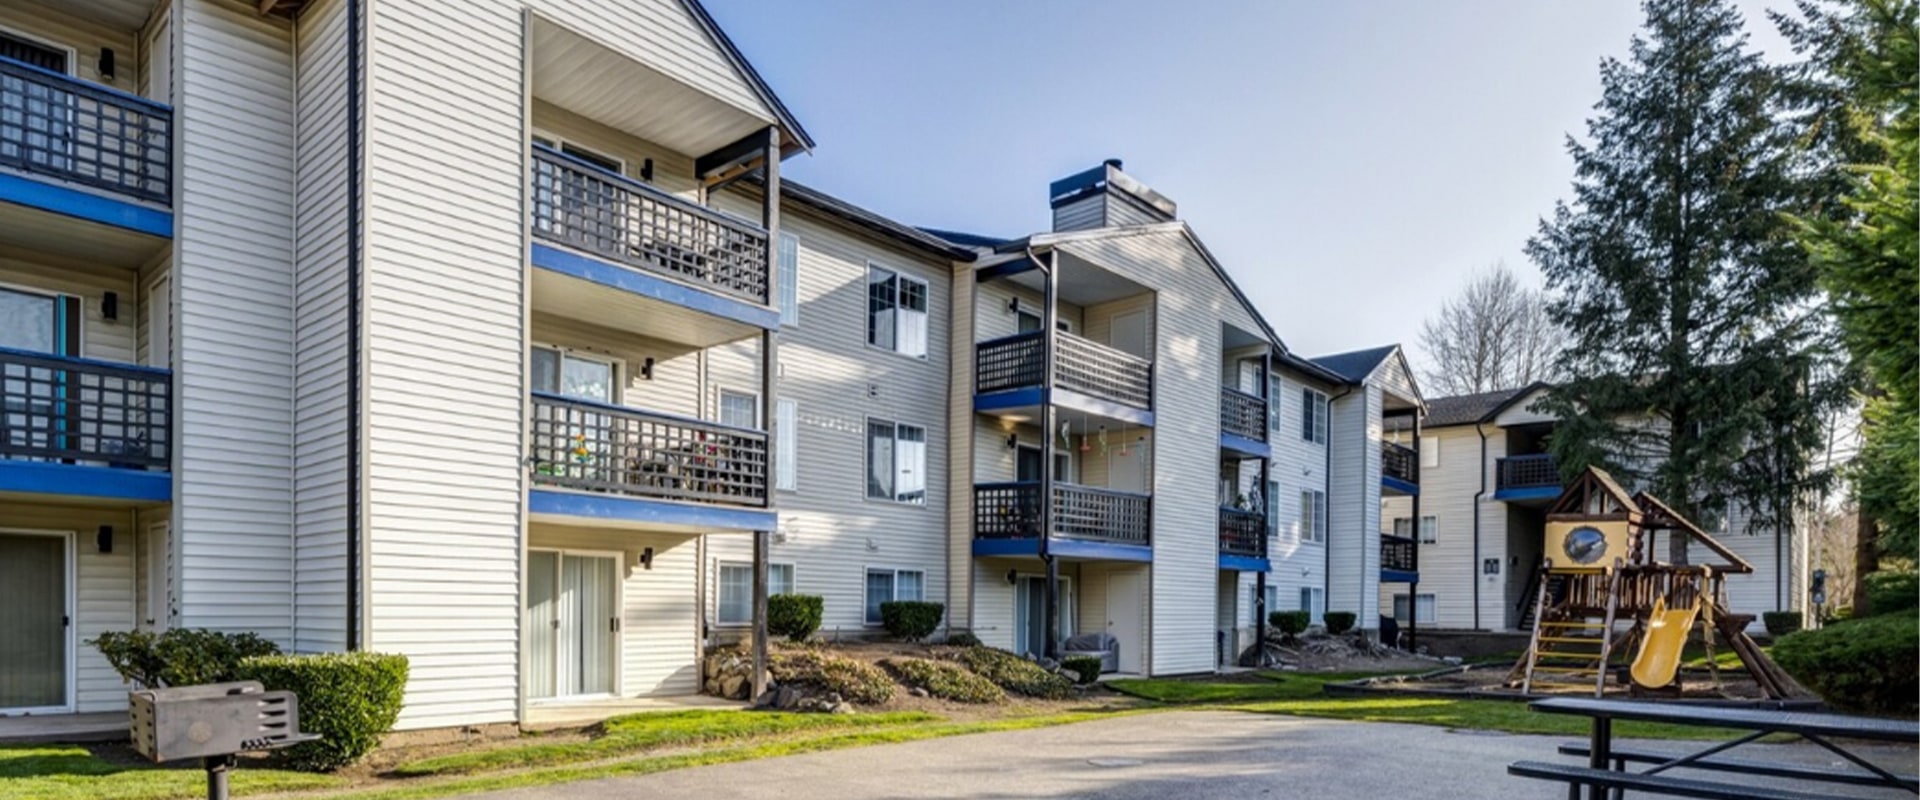 Woodbrook Apartments – Apartment Rehabilitation